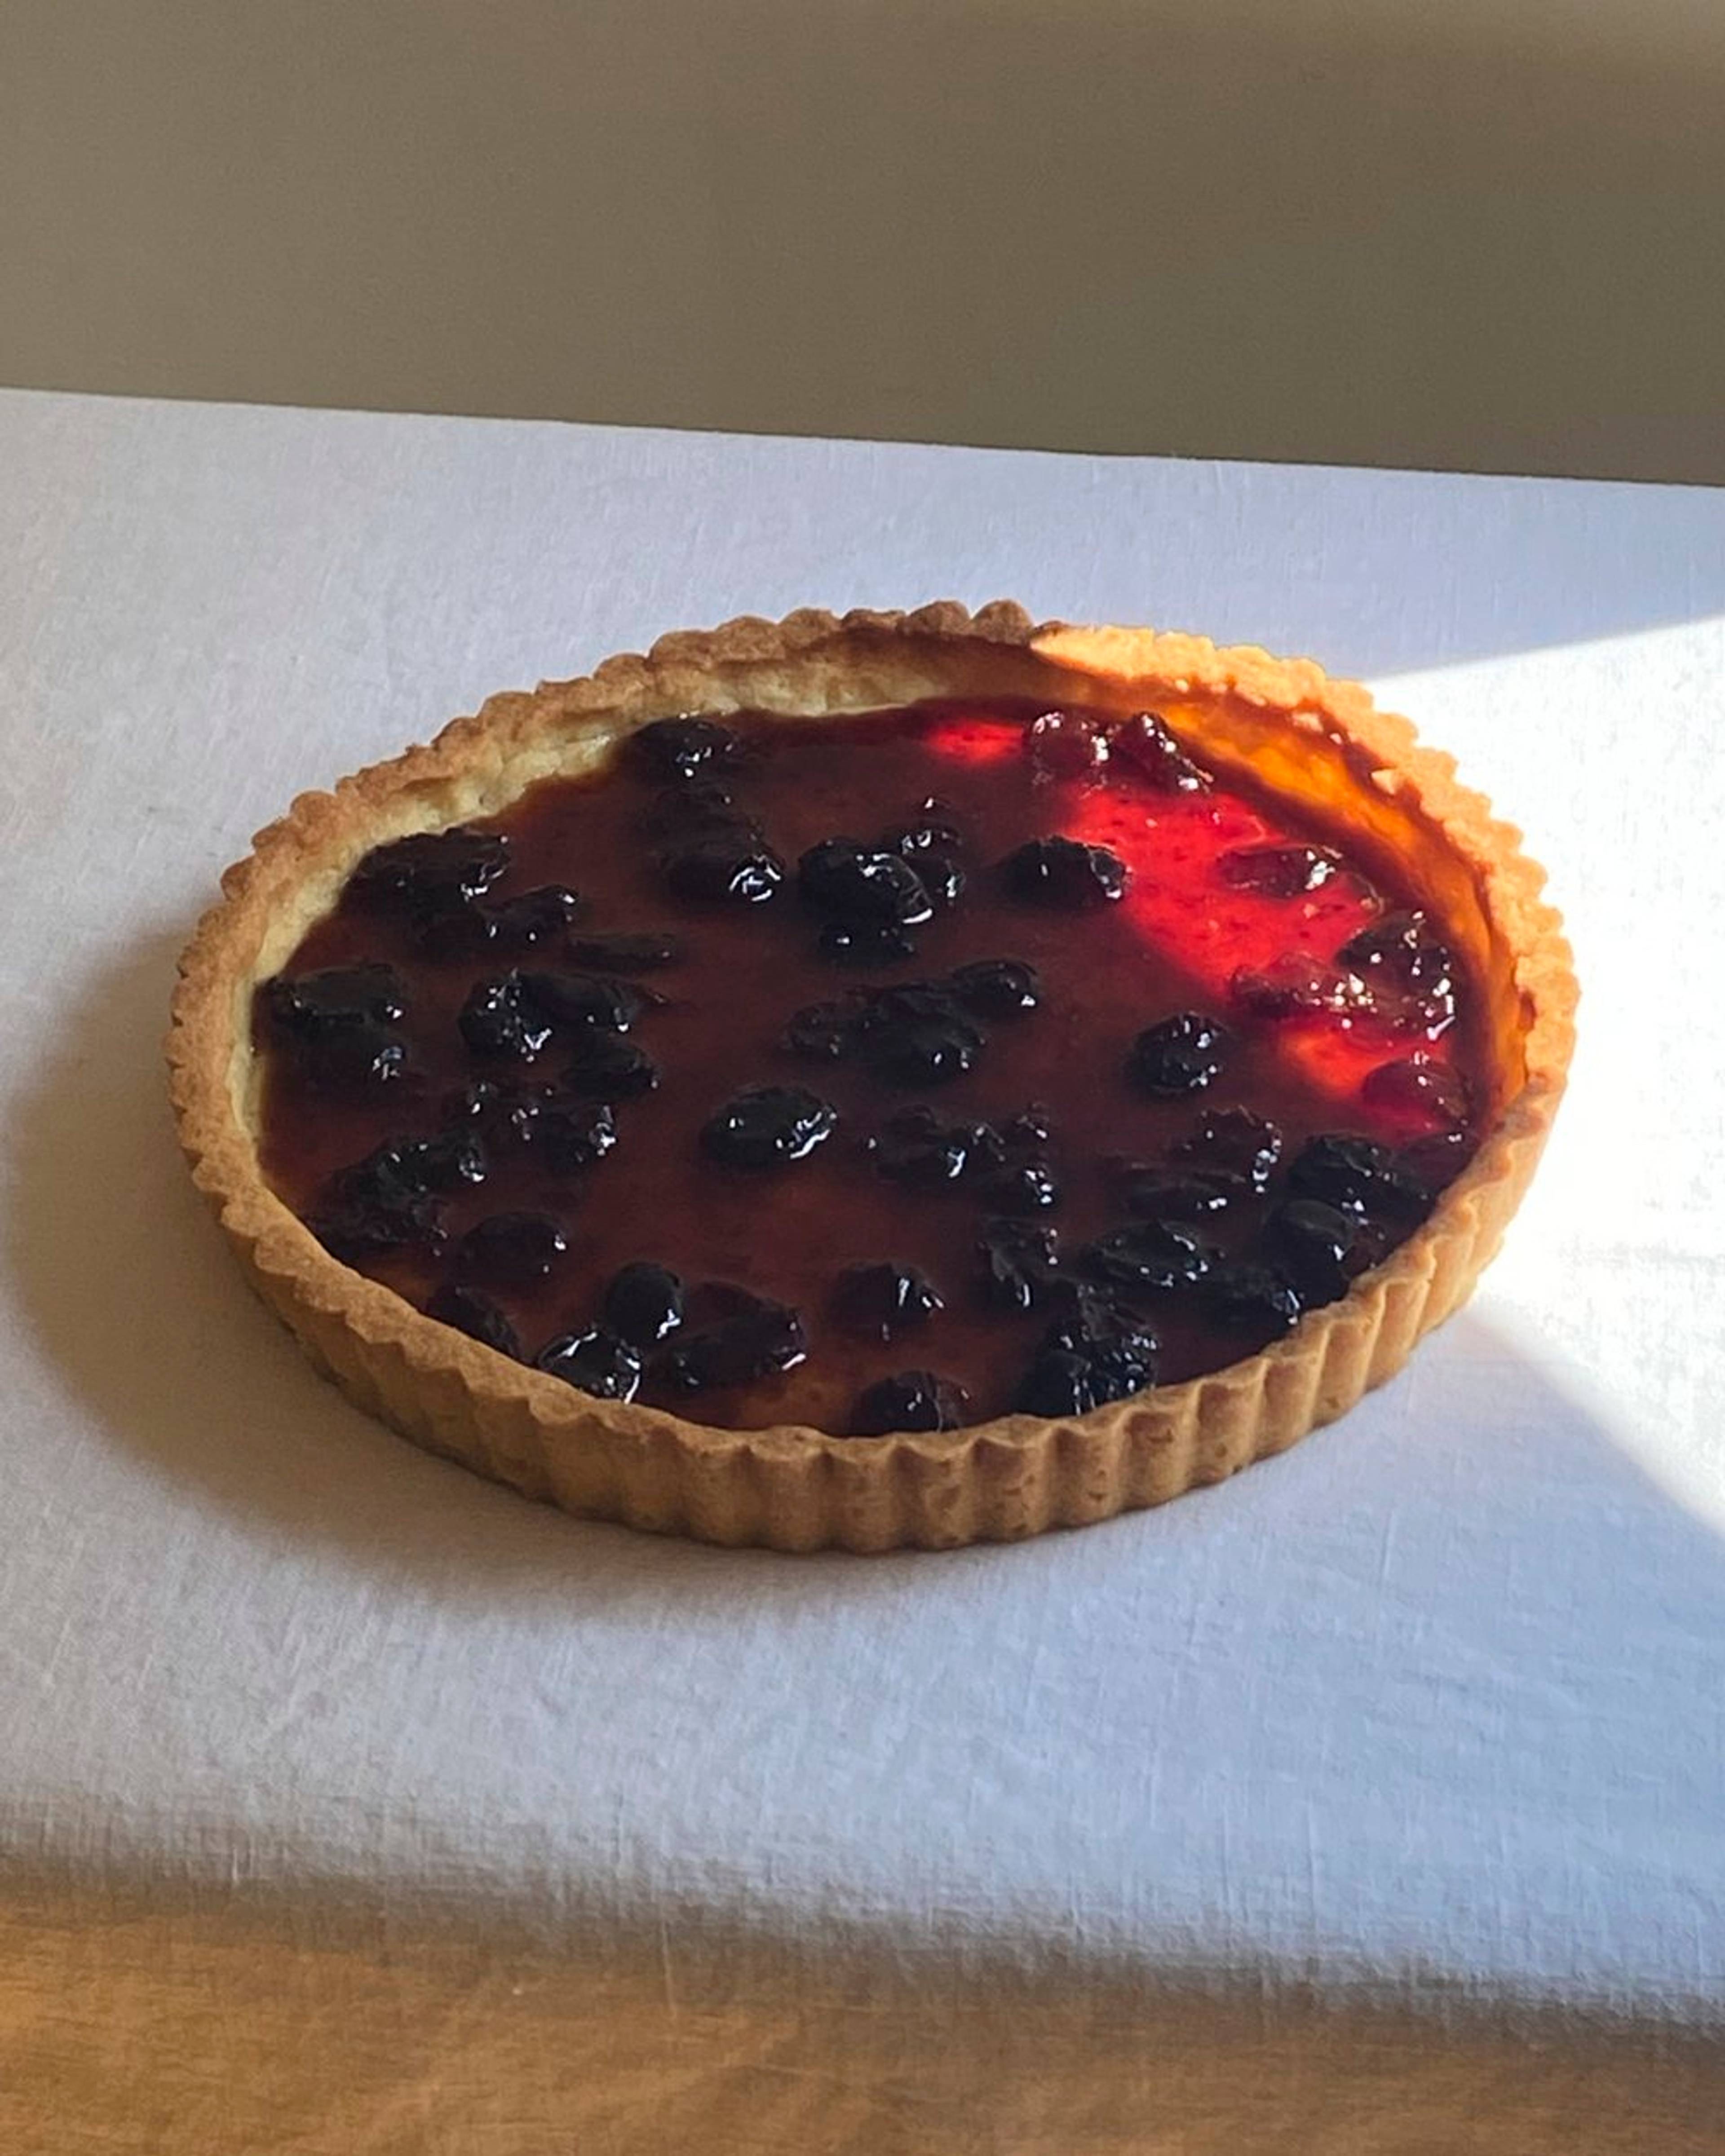 Cherry jam spread on tart base